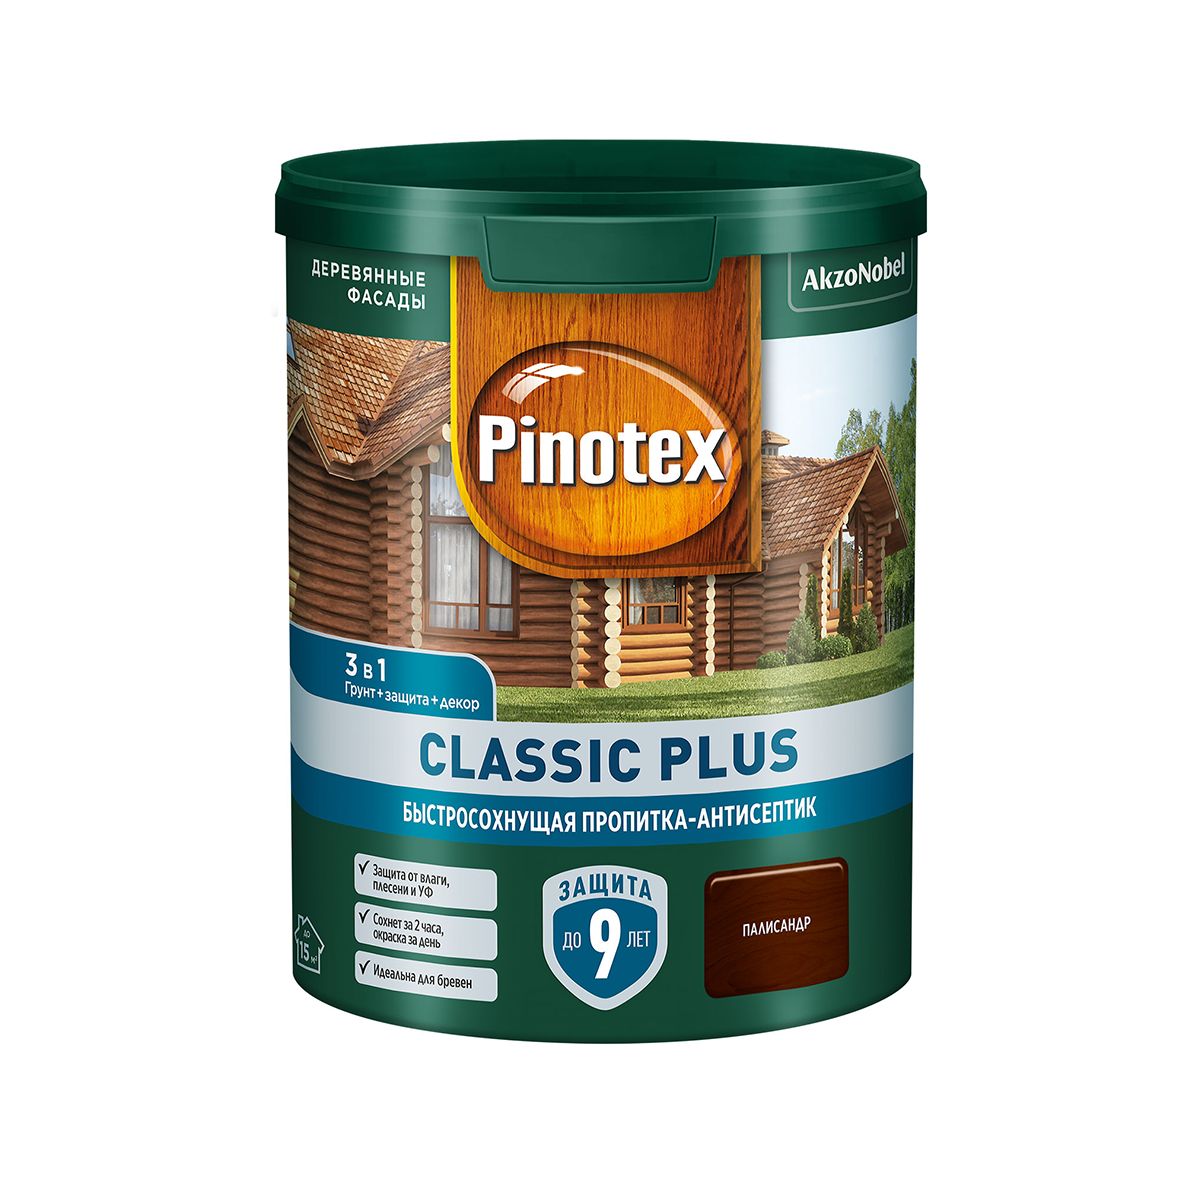 Пропитка-антисептик Pinotex Classic Plus 3 в 1,быстросохнущая, палисандр, 900 мл огнебиозащитная пропитка зао антисептик